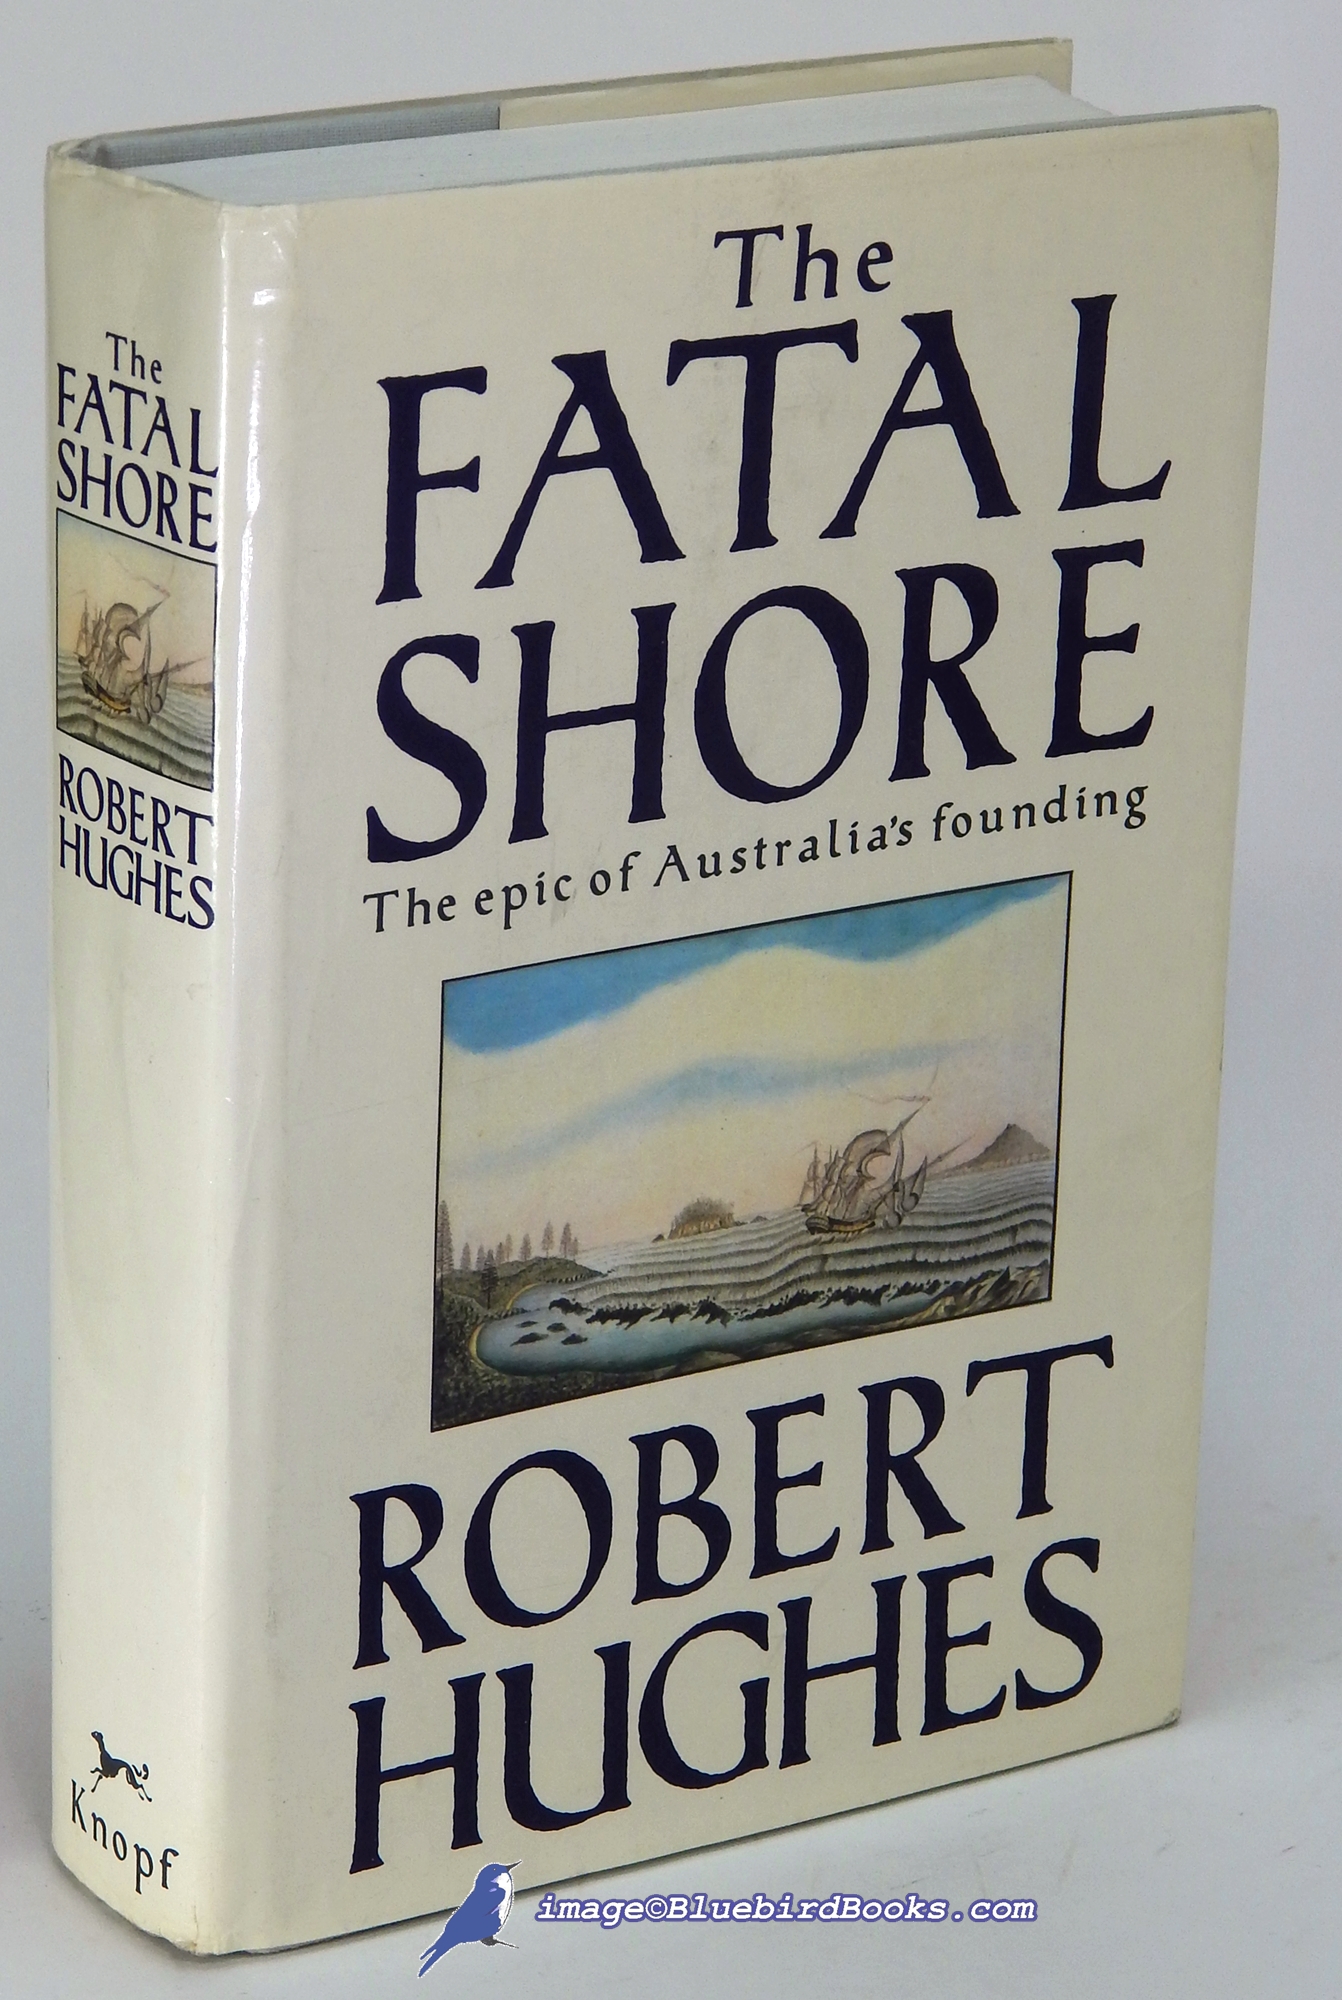 HUGHES, ROBERT - The Fatal Shore: The Epic of Australia's Founding